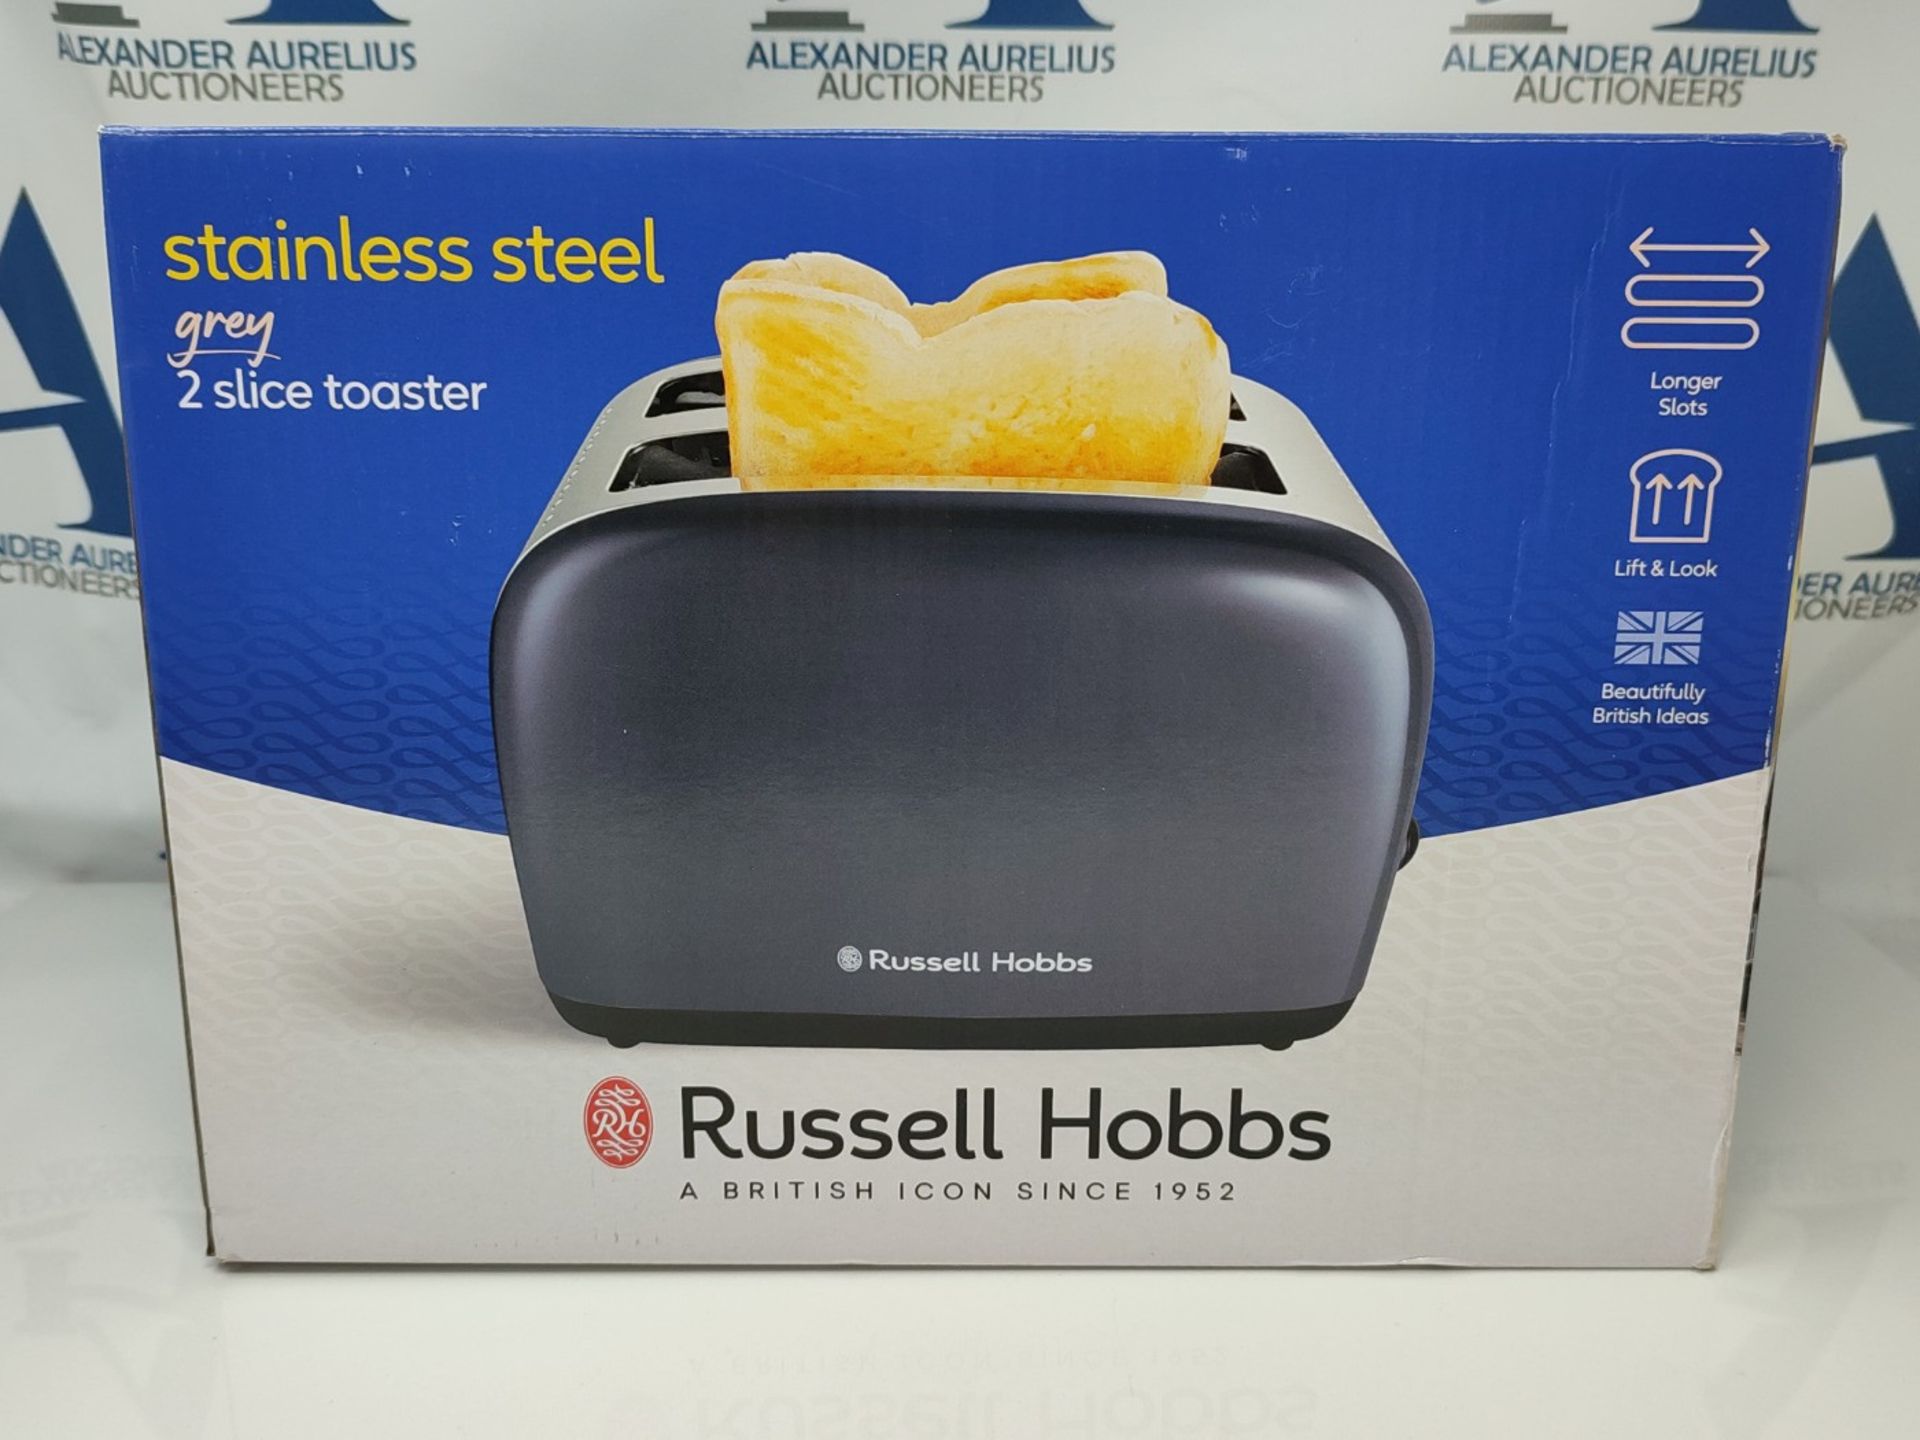 Russell Hobbs 26552 Stainless Steel 2 Slice Toaster, Grey - Image 2 of 3